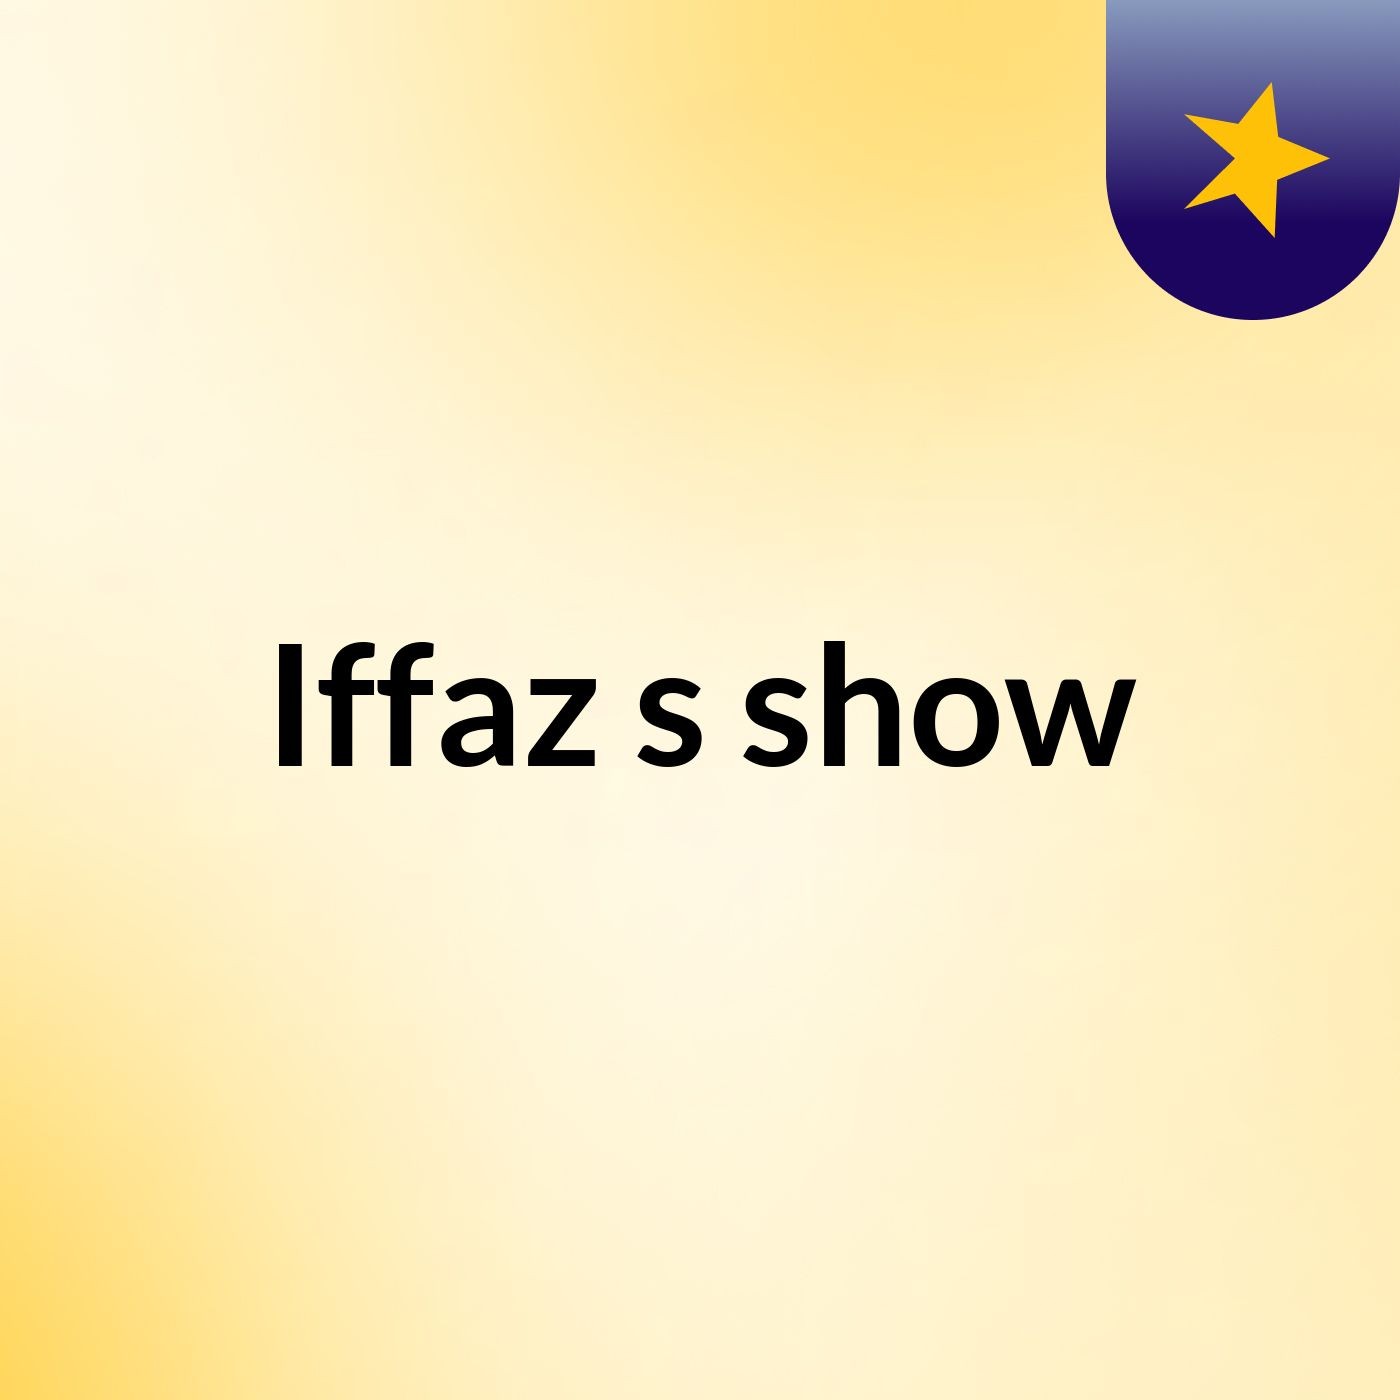 Iffaz's show